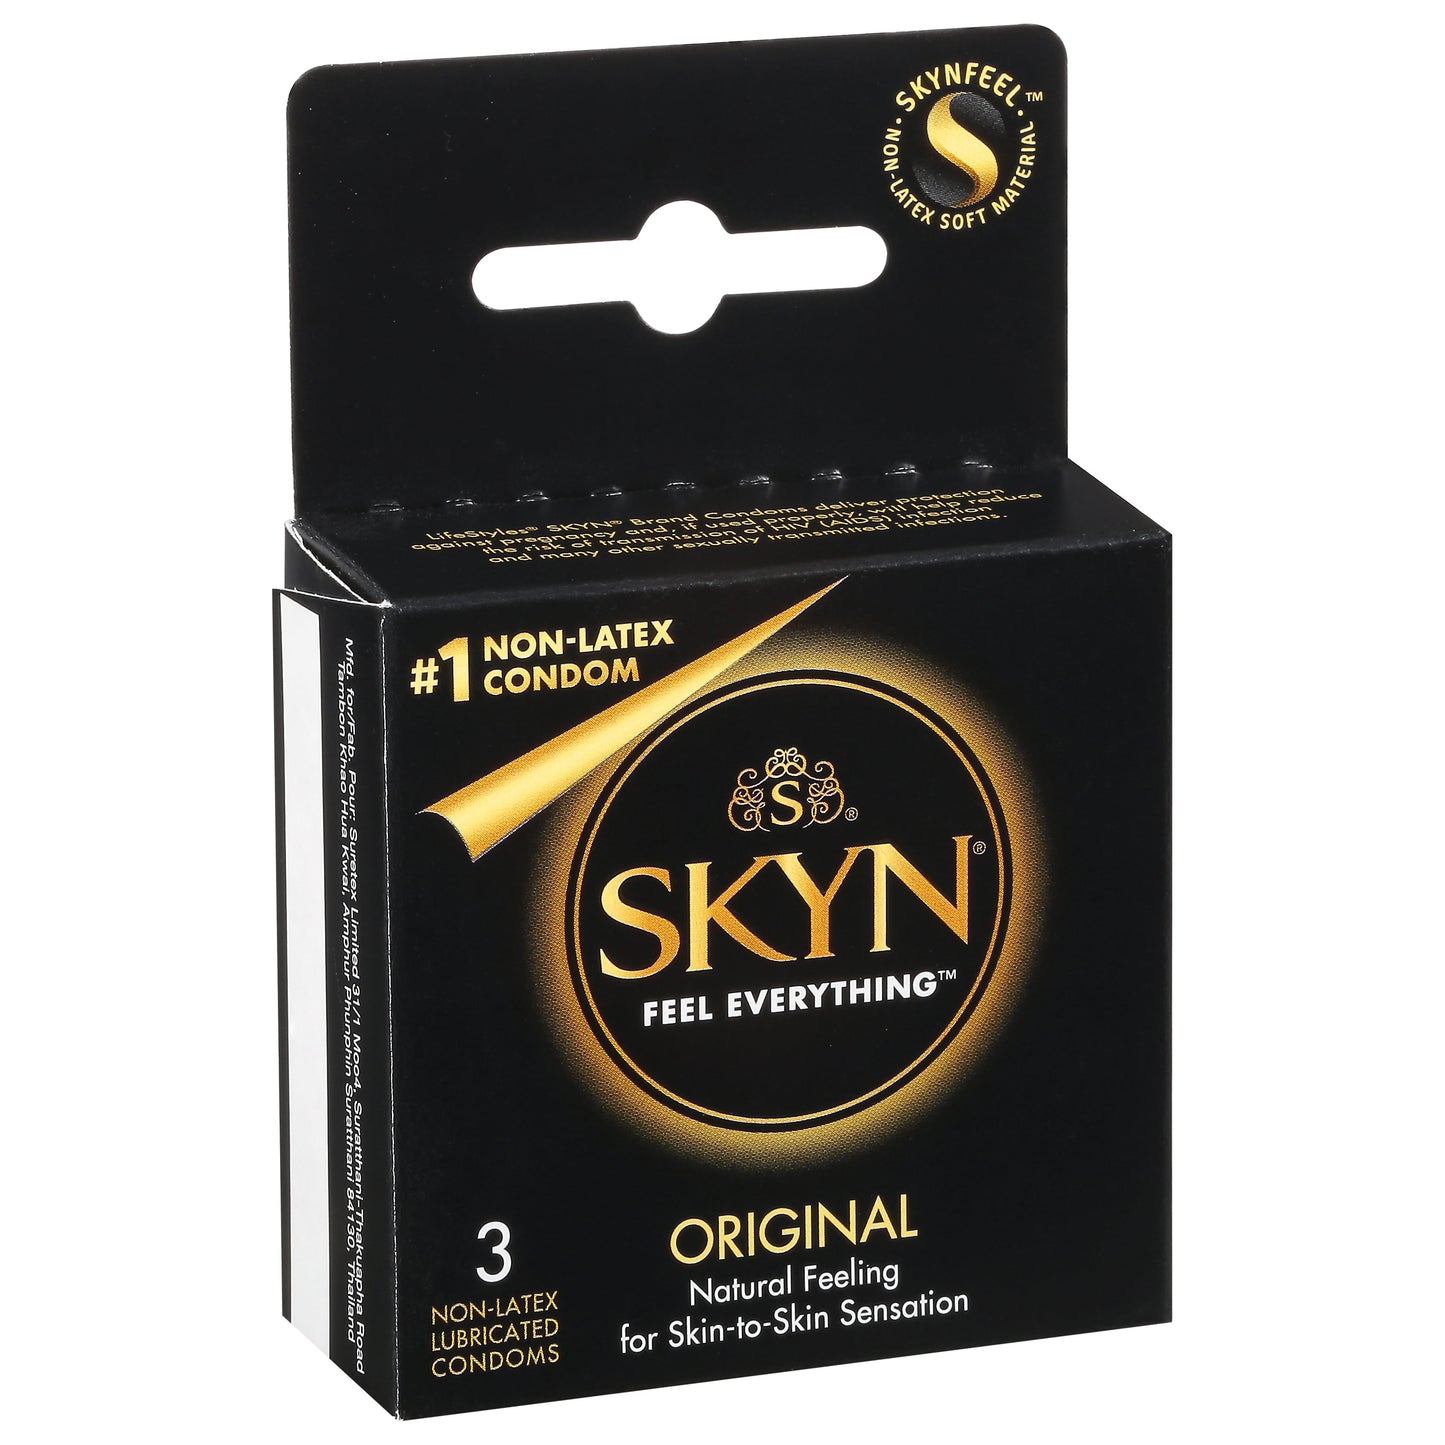 SKYN Non-Latex Lubricated Condoms, Original, 3 Count